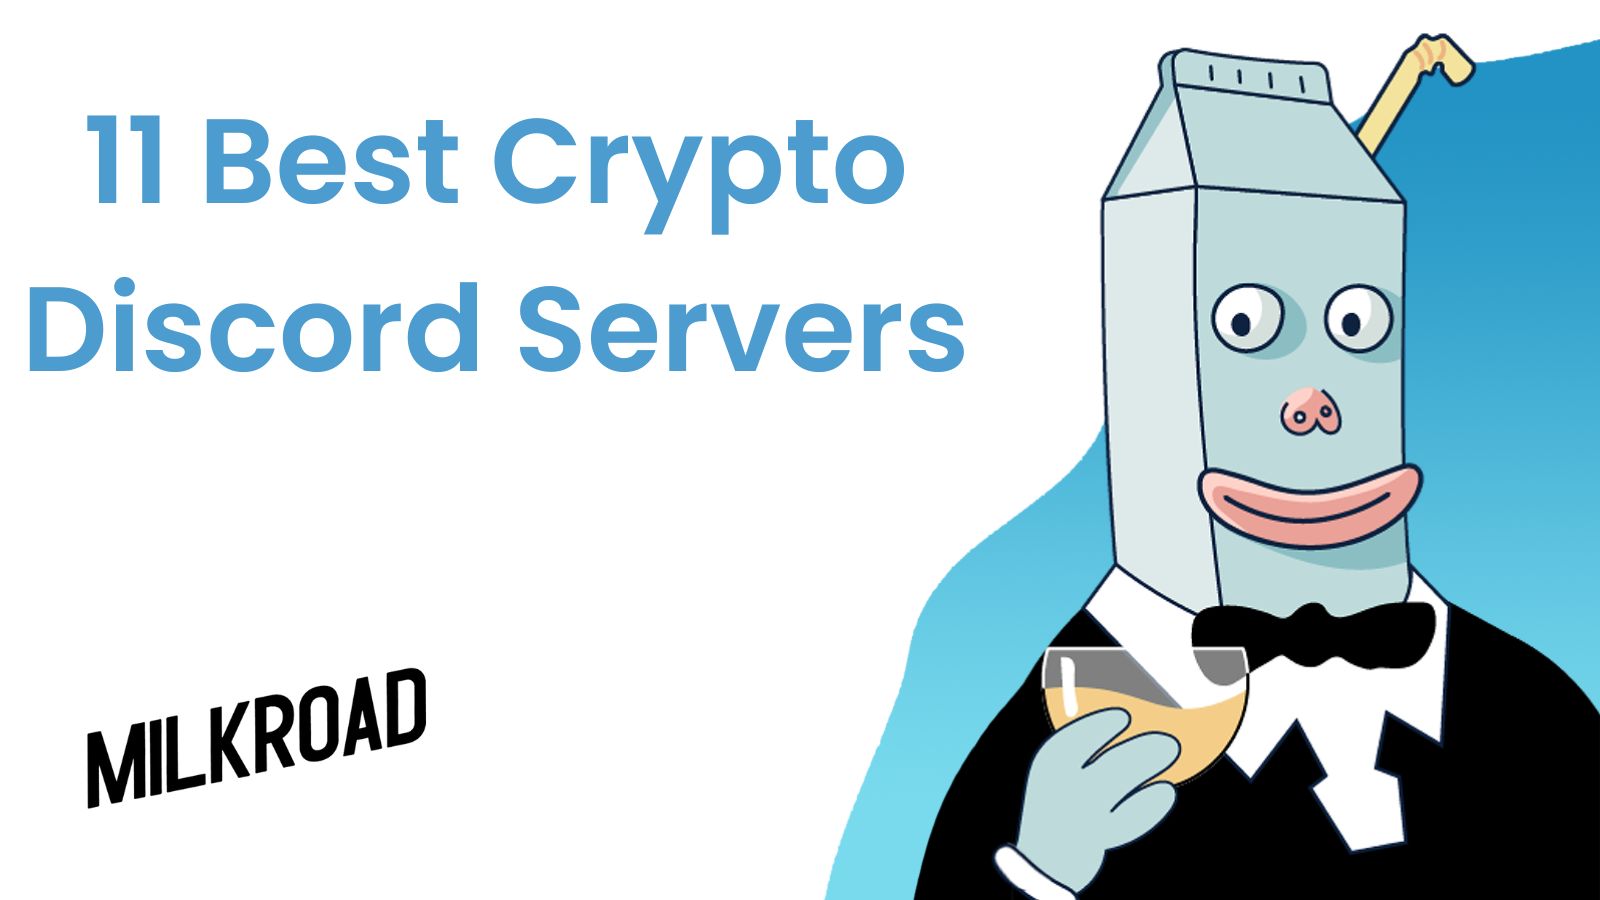 11 Best Crypto Discord Servers